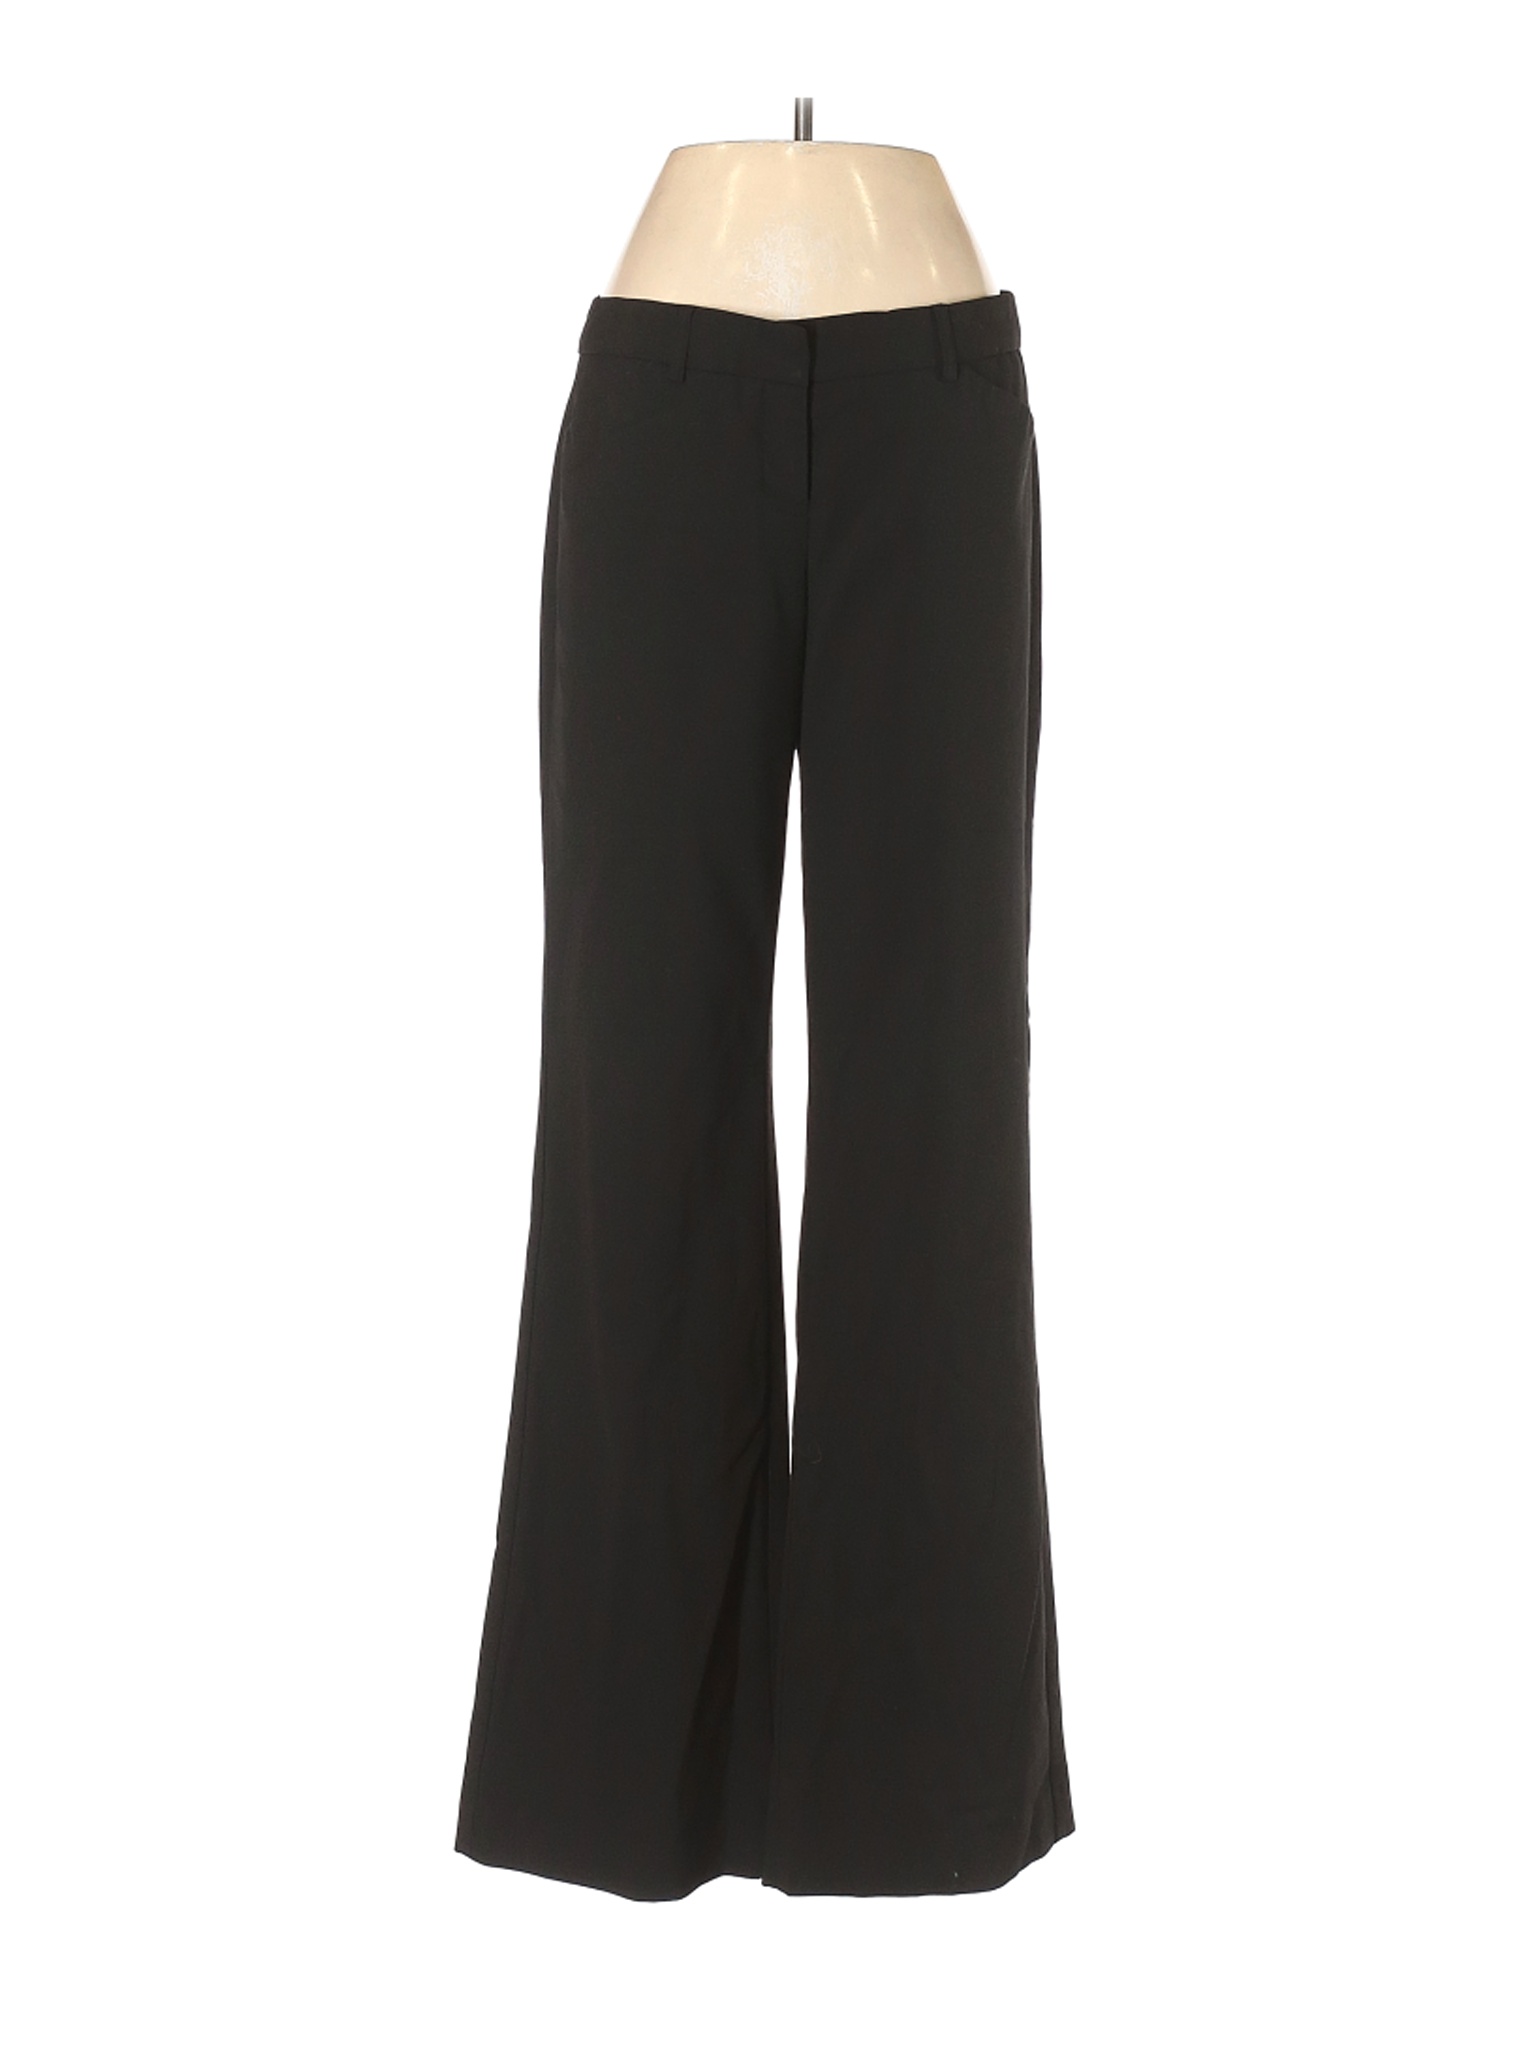 Express Design Studio Women Black Dress Pants 2 | eBay